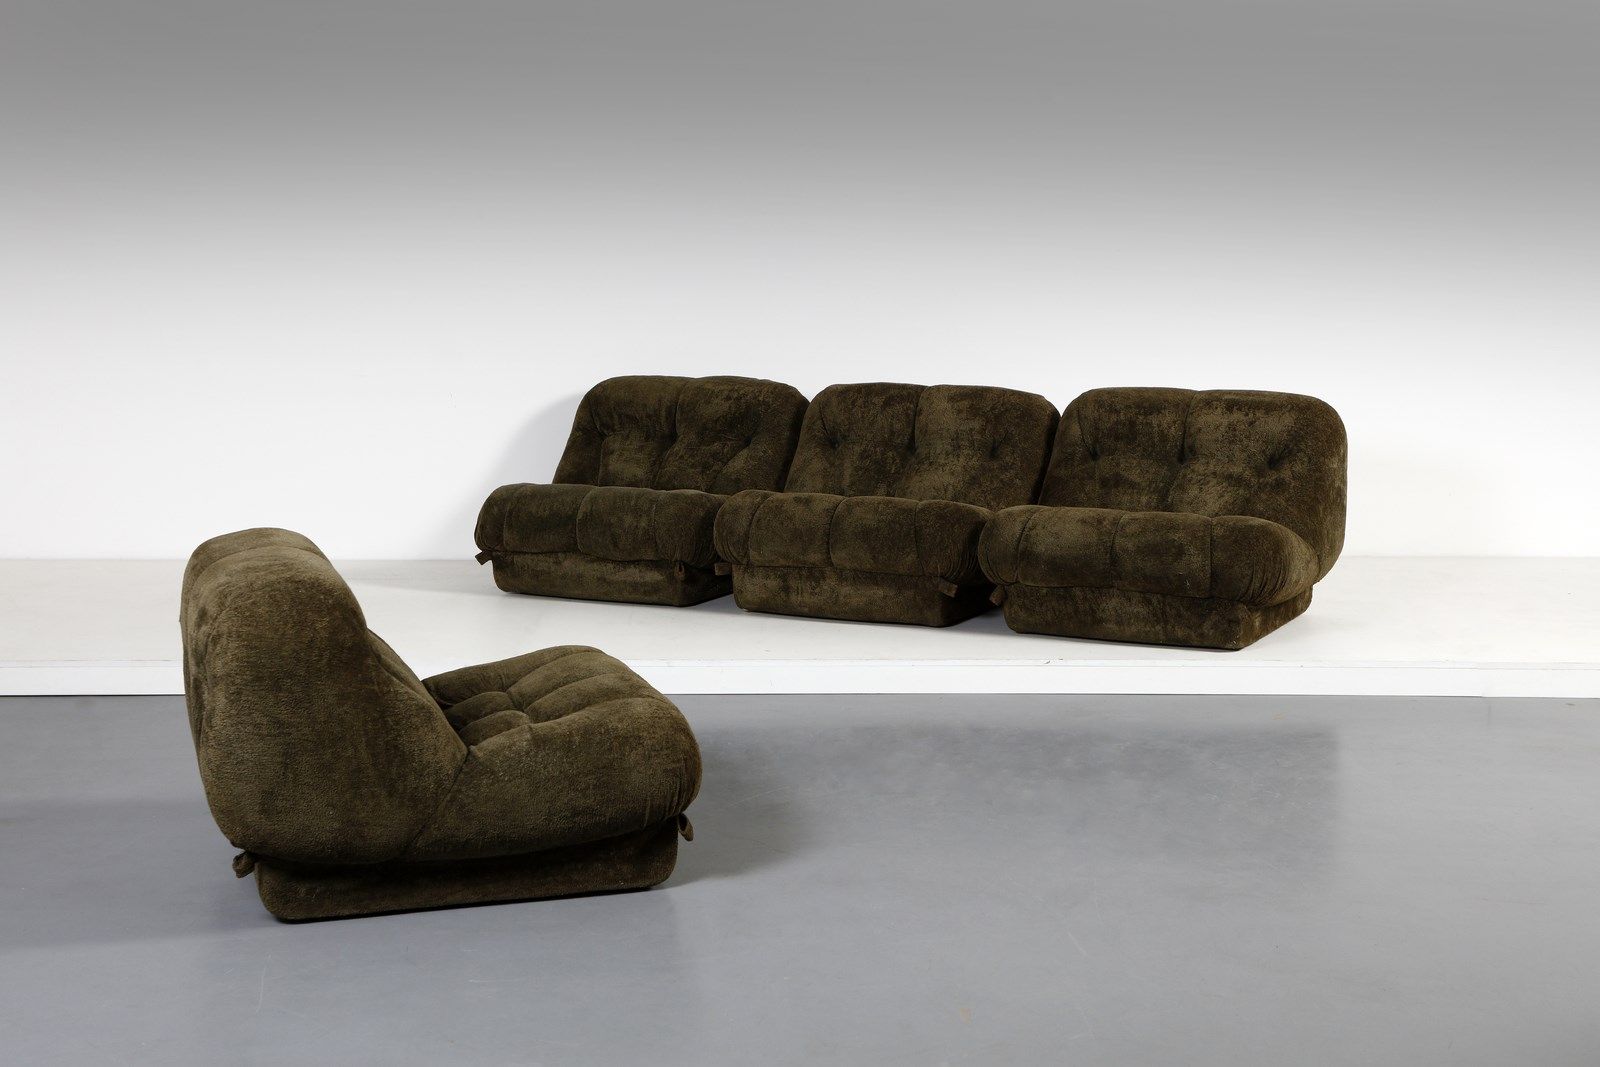 MATURI RIMO RIMO模块化沙发MIMO Nuvolone生产。聚氨酯泡沫和织物。Cm 90.00 x 70.00 x 90.00. 1970年代。(&hellip;